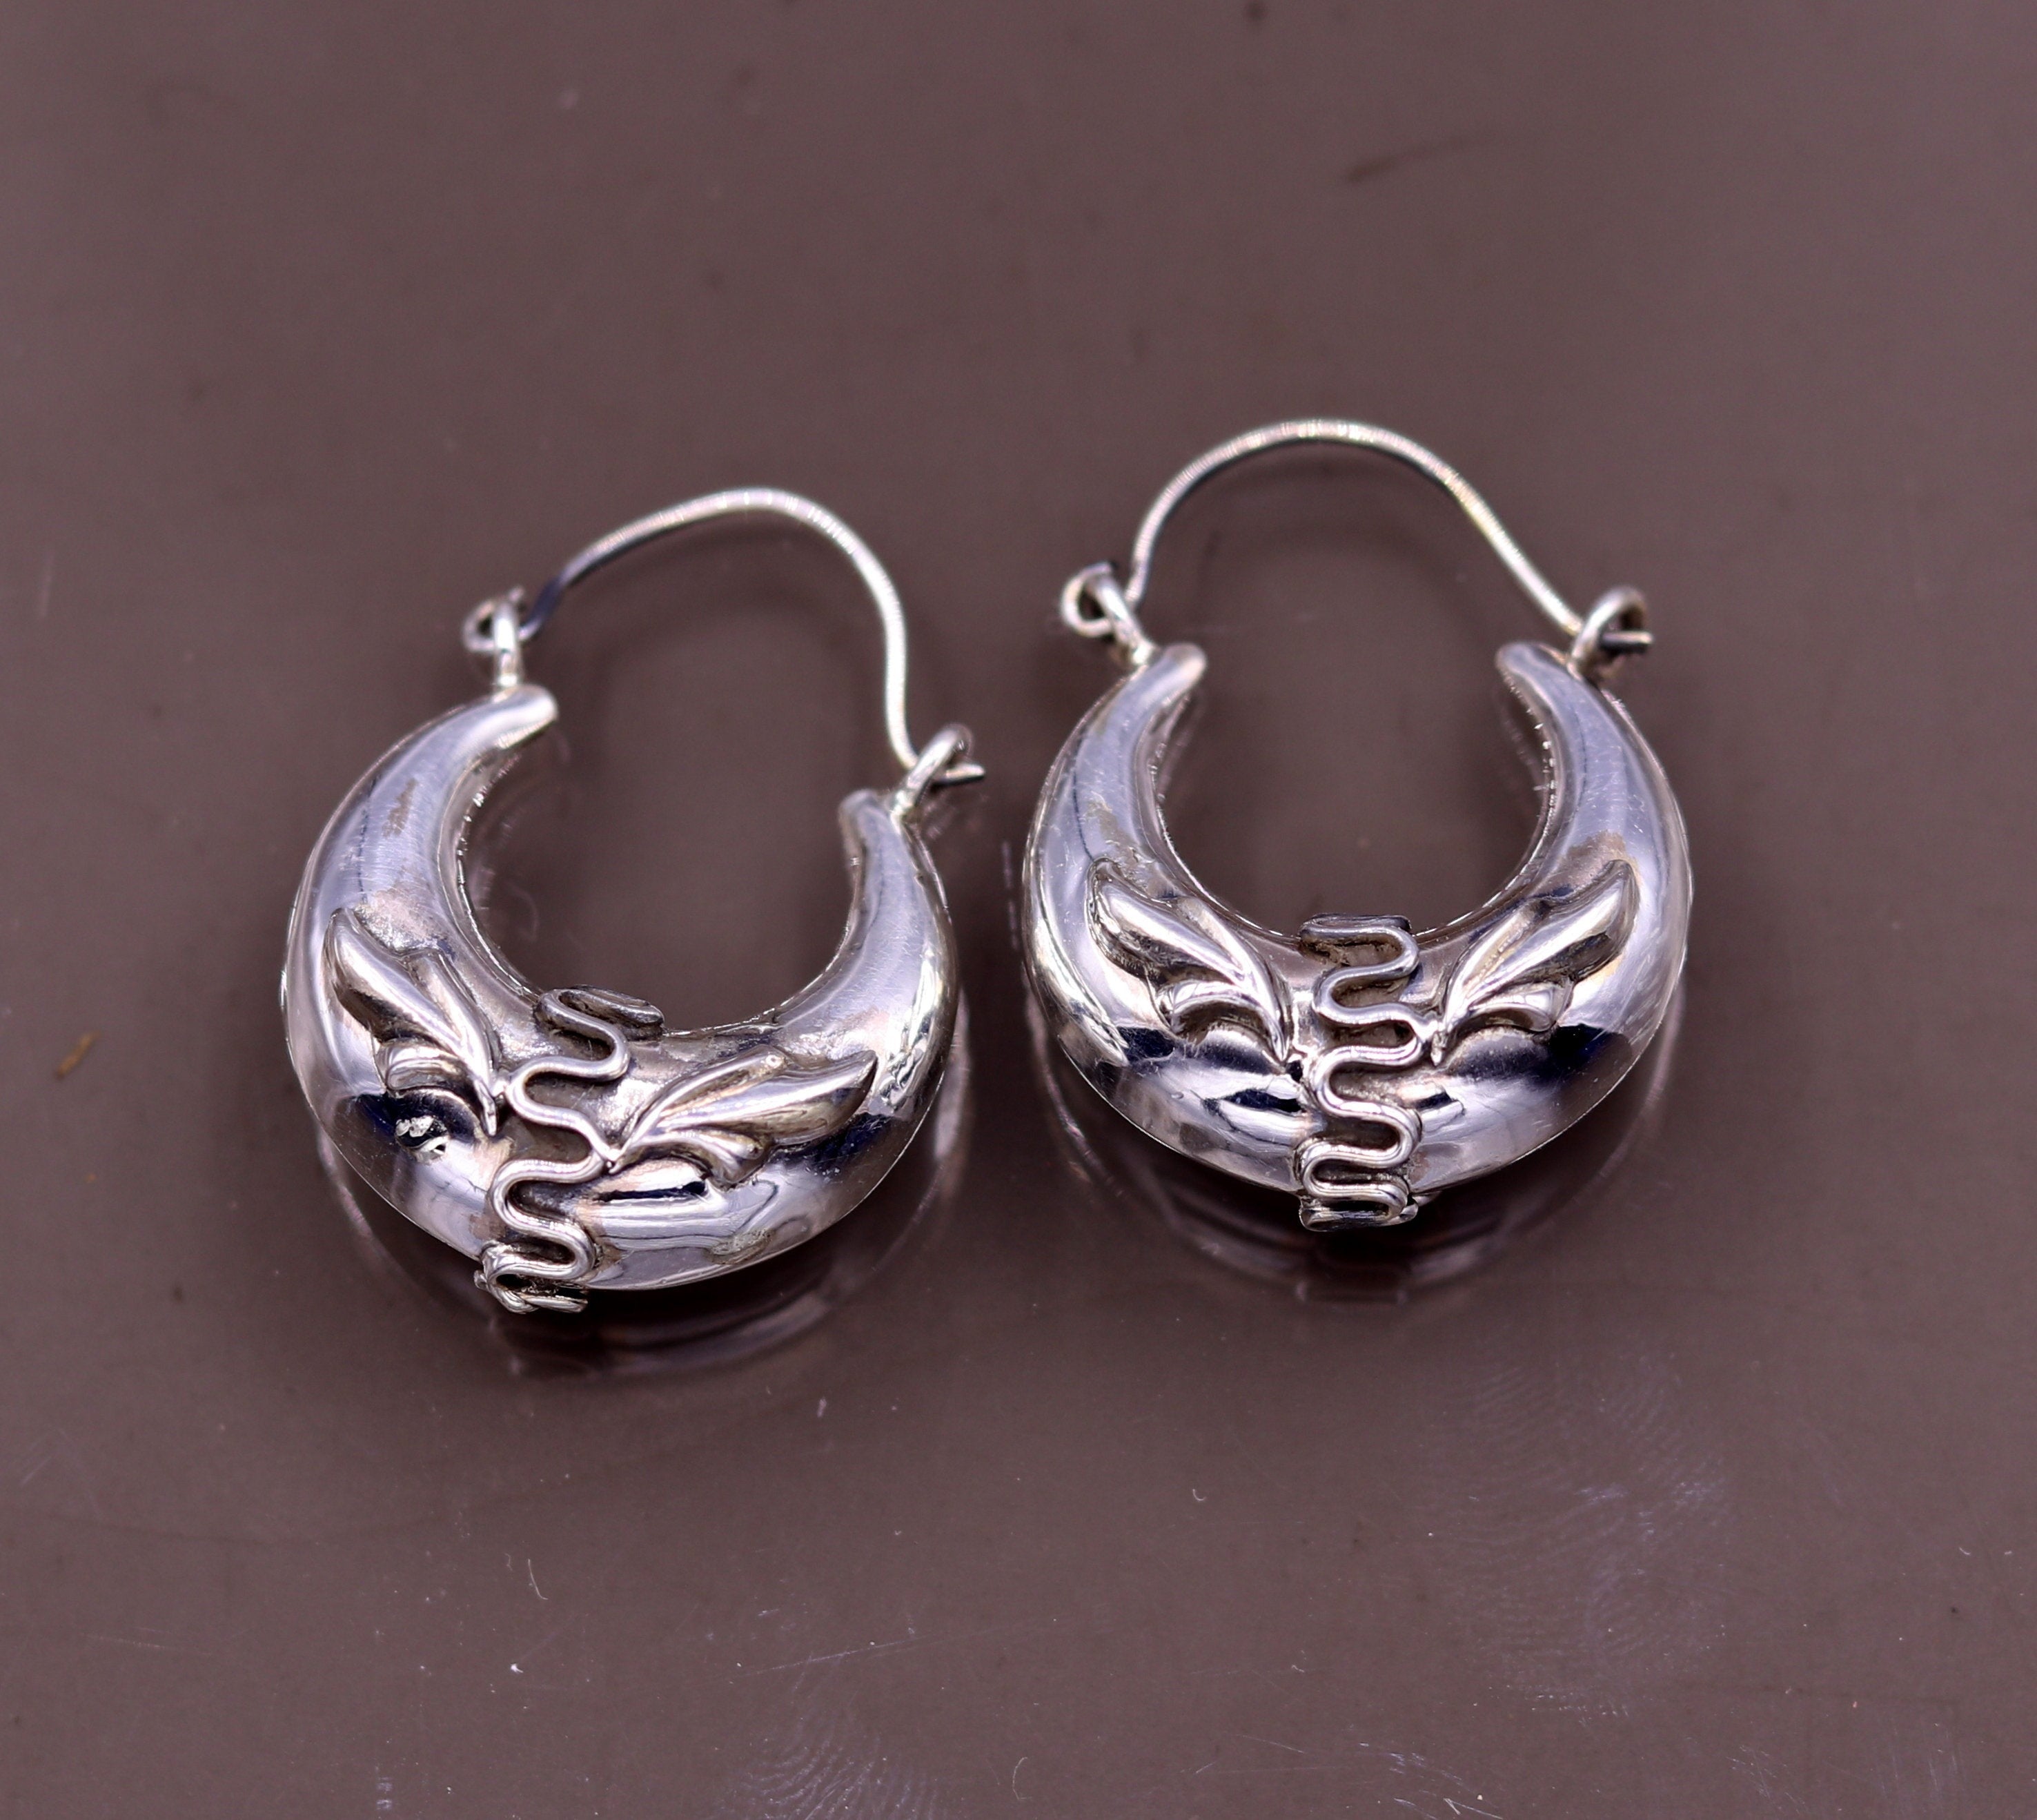 40 Grams Gold Chandbali Earrings Design - South India Jewels | Jewelry  design earrings, Chandbali earrings, Gold earrings designs